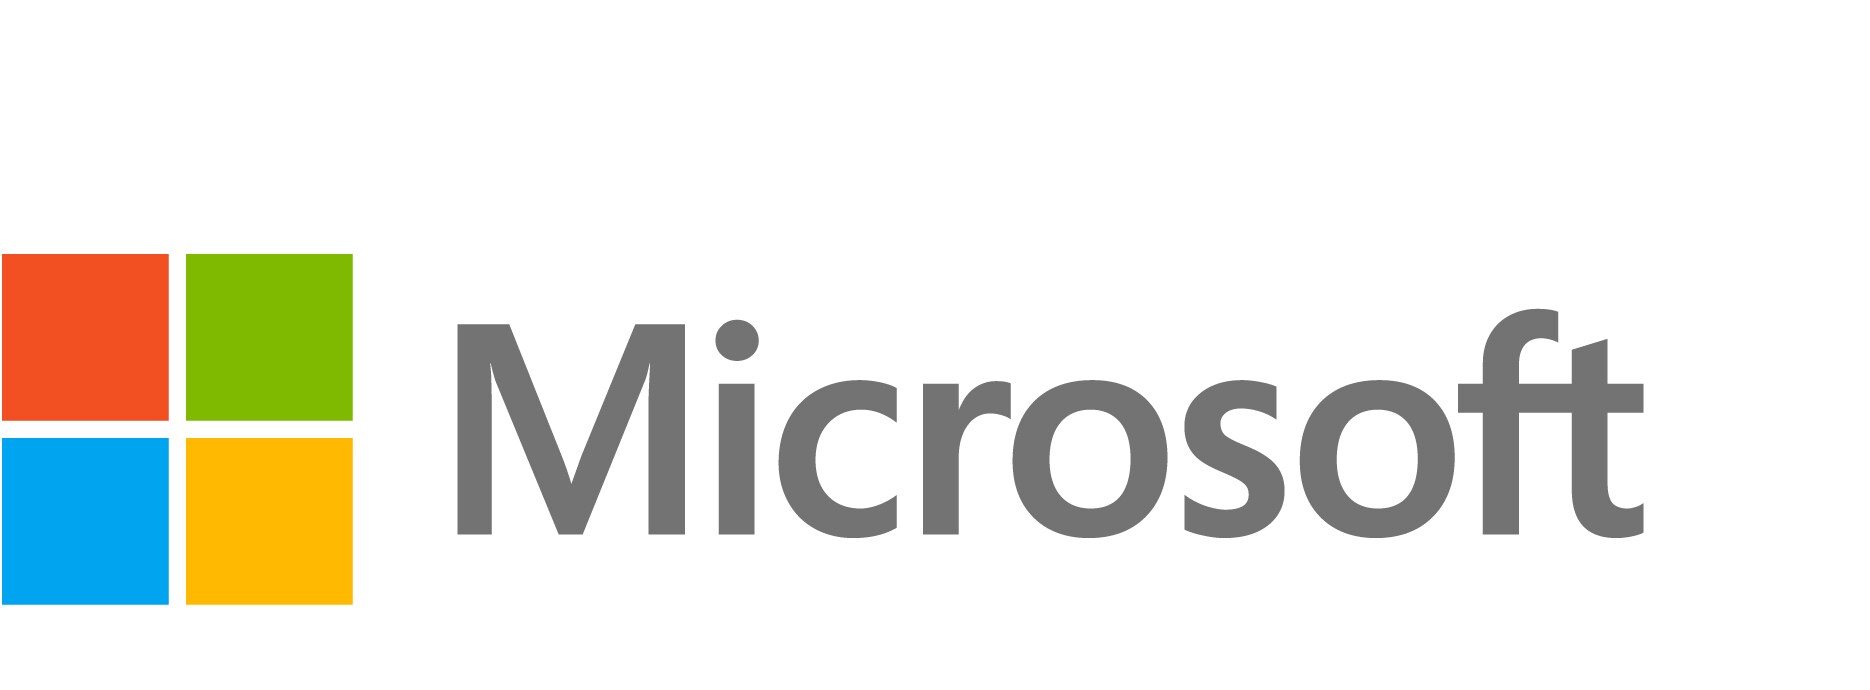 Microsoft Dynamics 365 for Operations, Enterprise edition - Sandbox Tier 2: Standard Acceptance testing - subscription